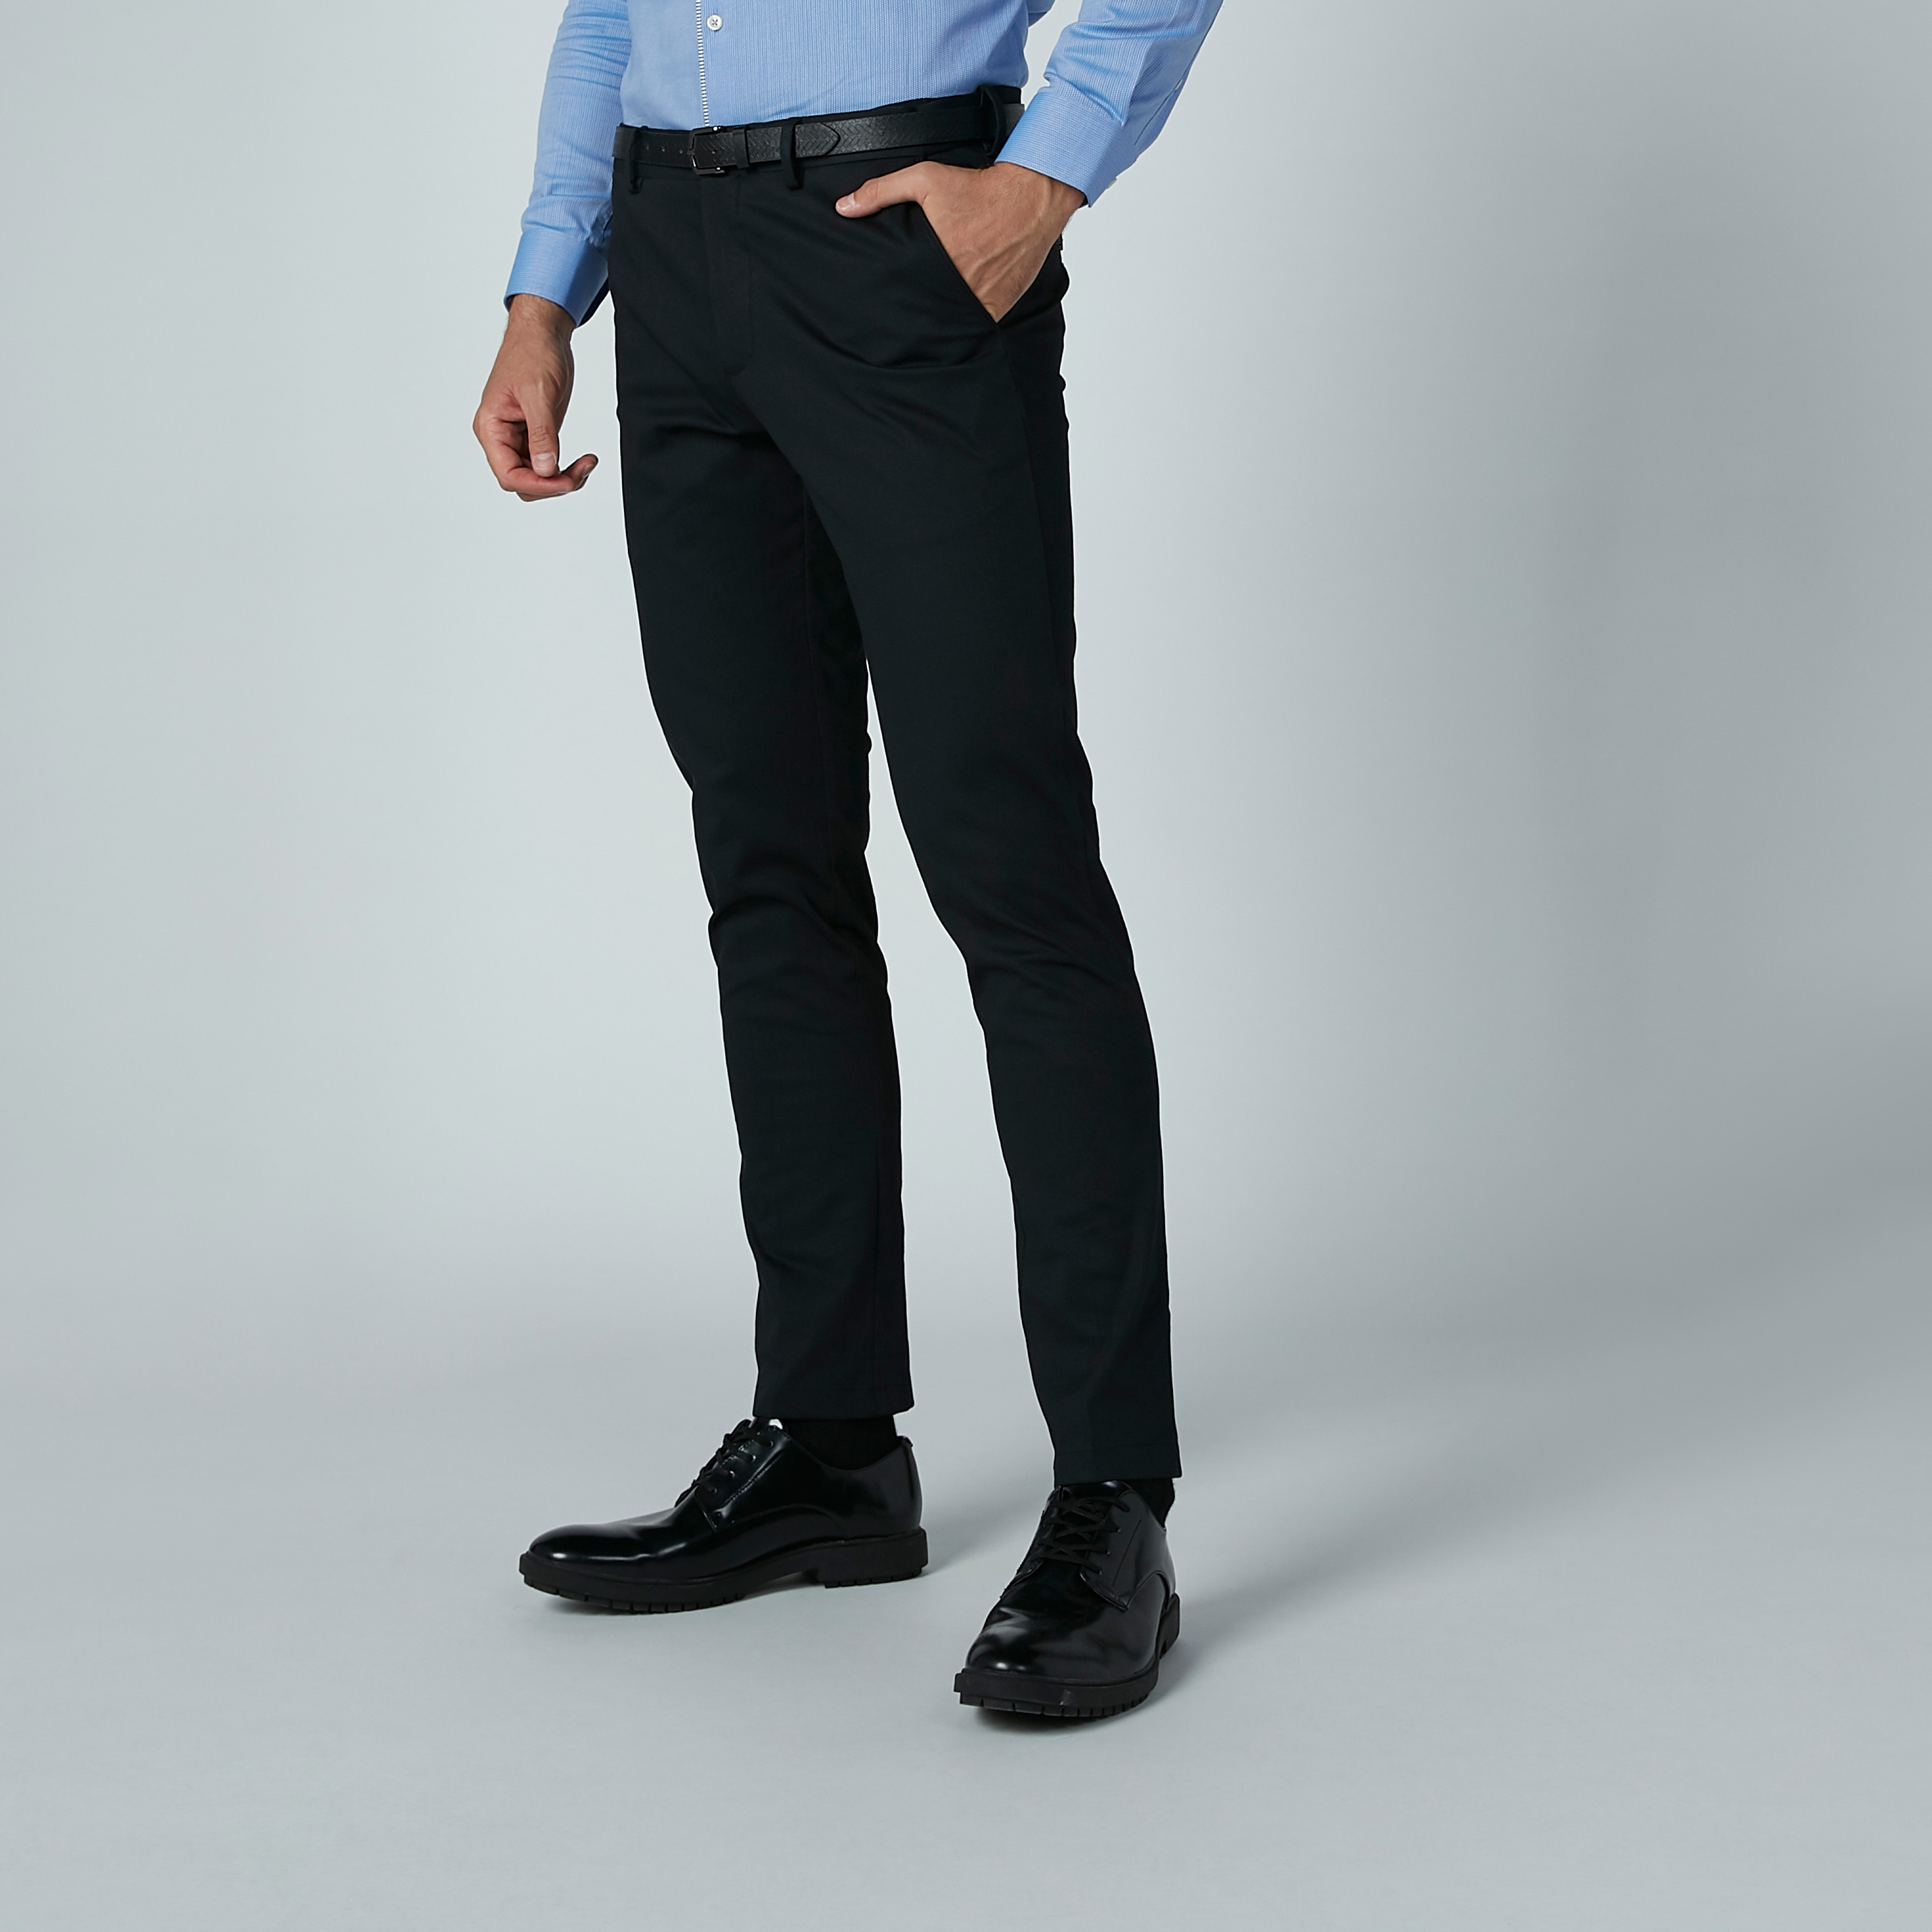 Basic pants with belt loops - Black | Guts & Gusto